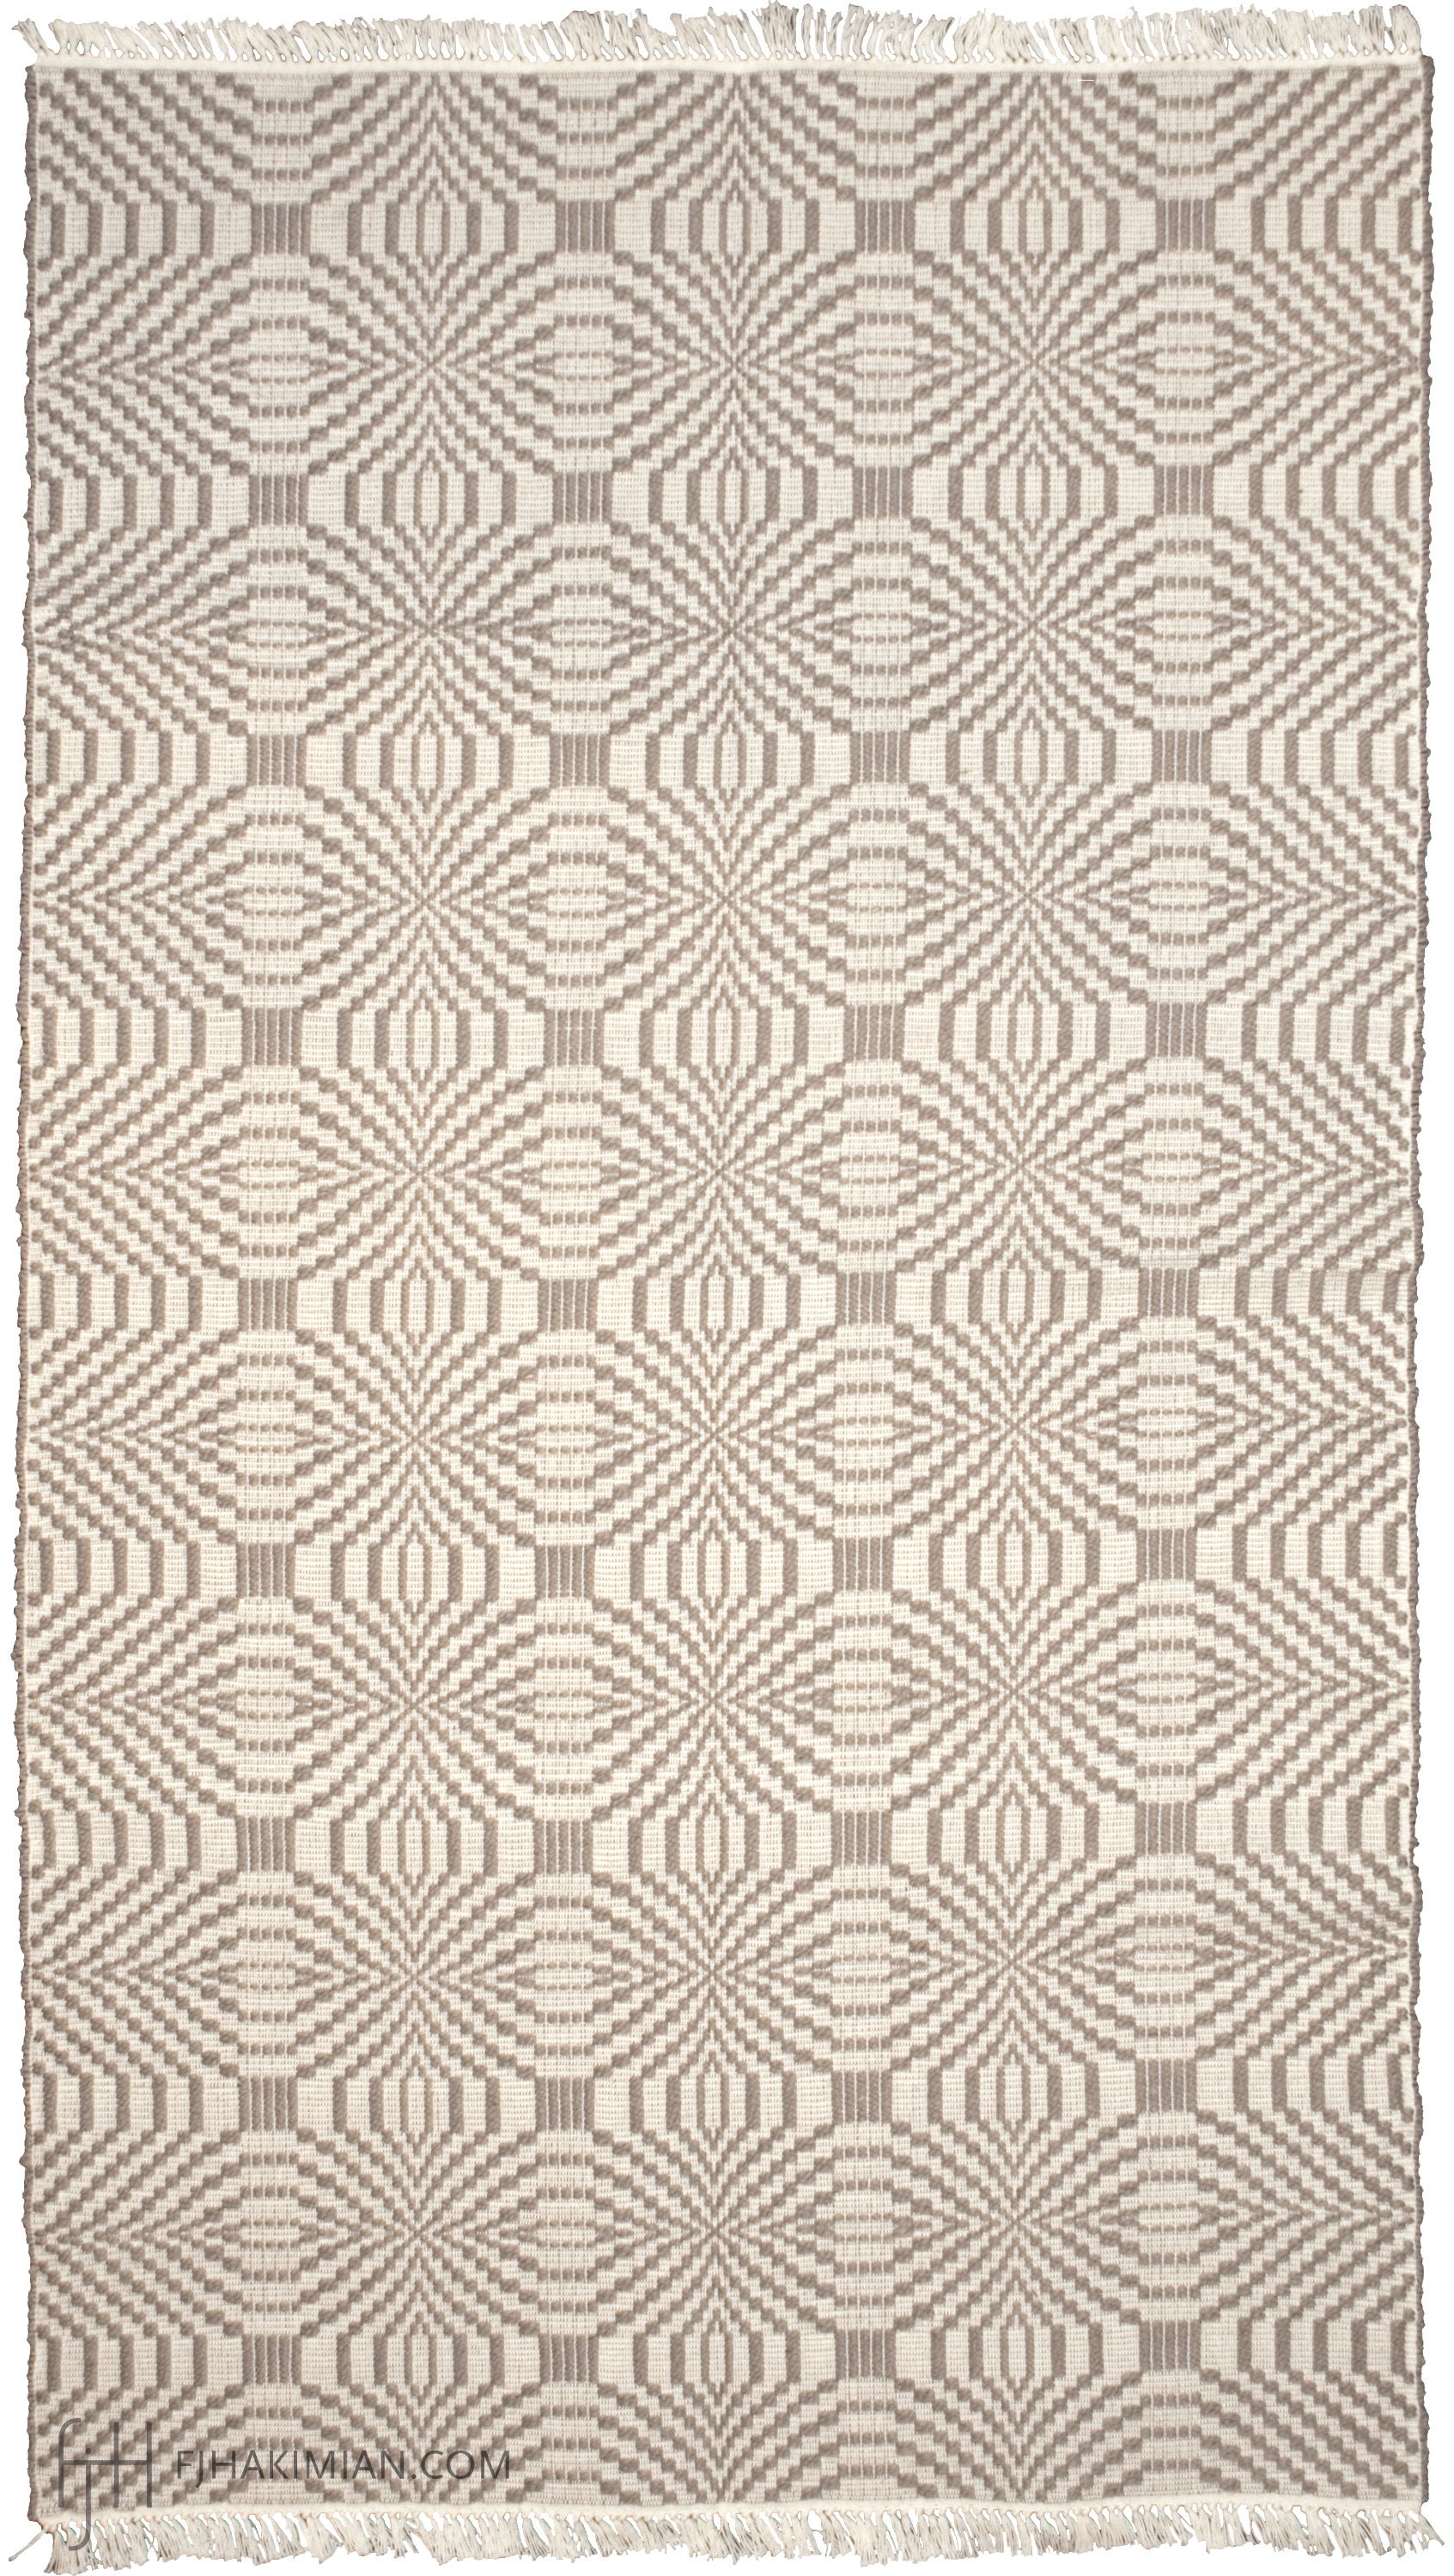 25092 | SIS-102 Design | Custom Sardinian Carpet | FJ Hakimian | Carpet Gallery in NYC